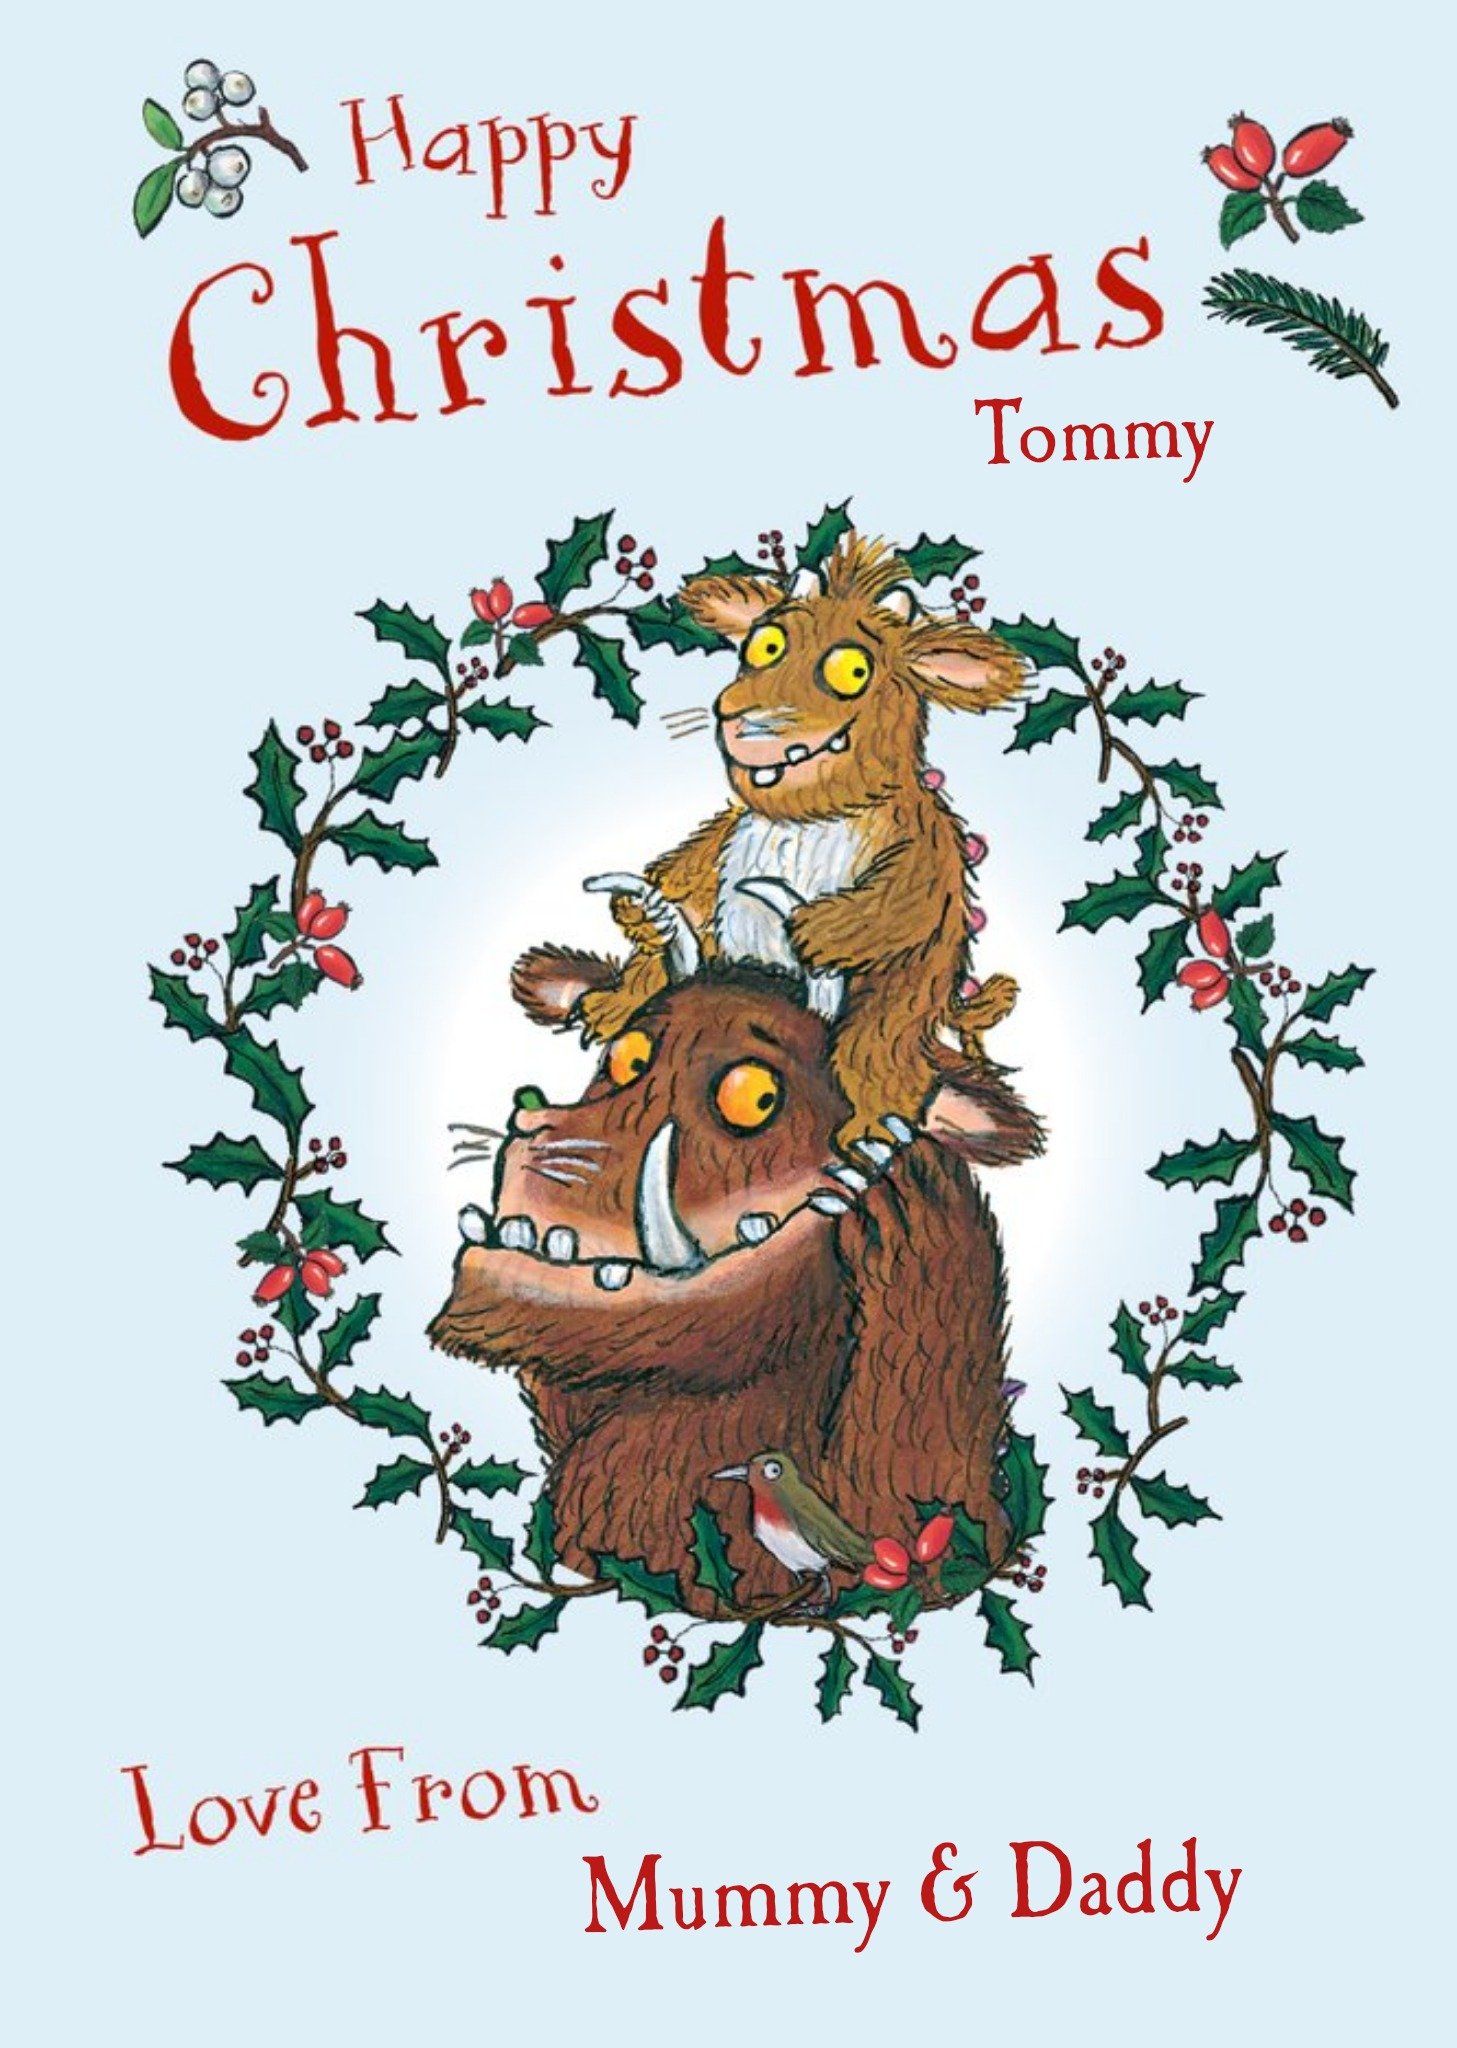 The Gruffalo Illustrated Wreath Happy Christmas Card Ecard